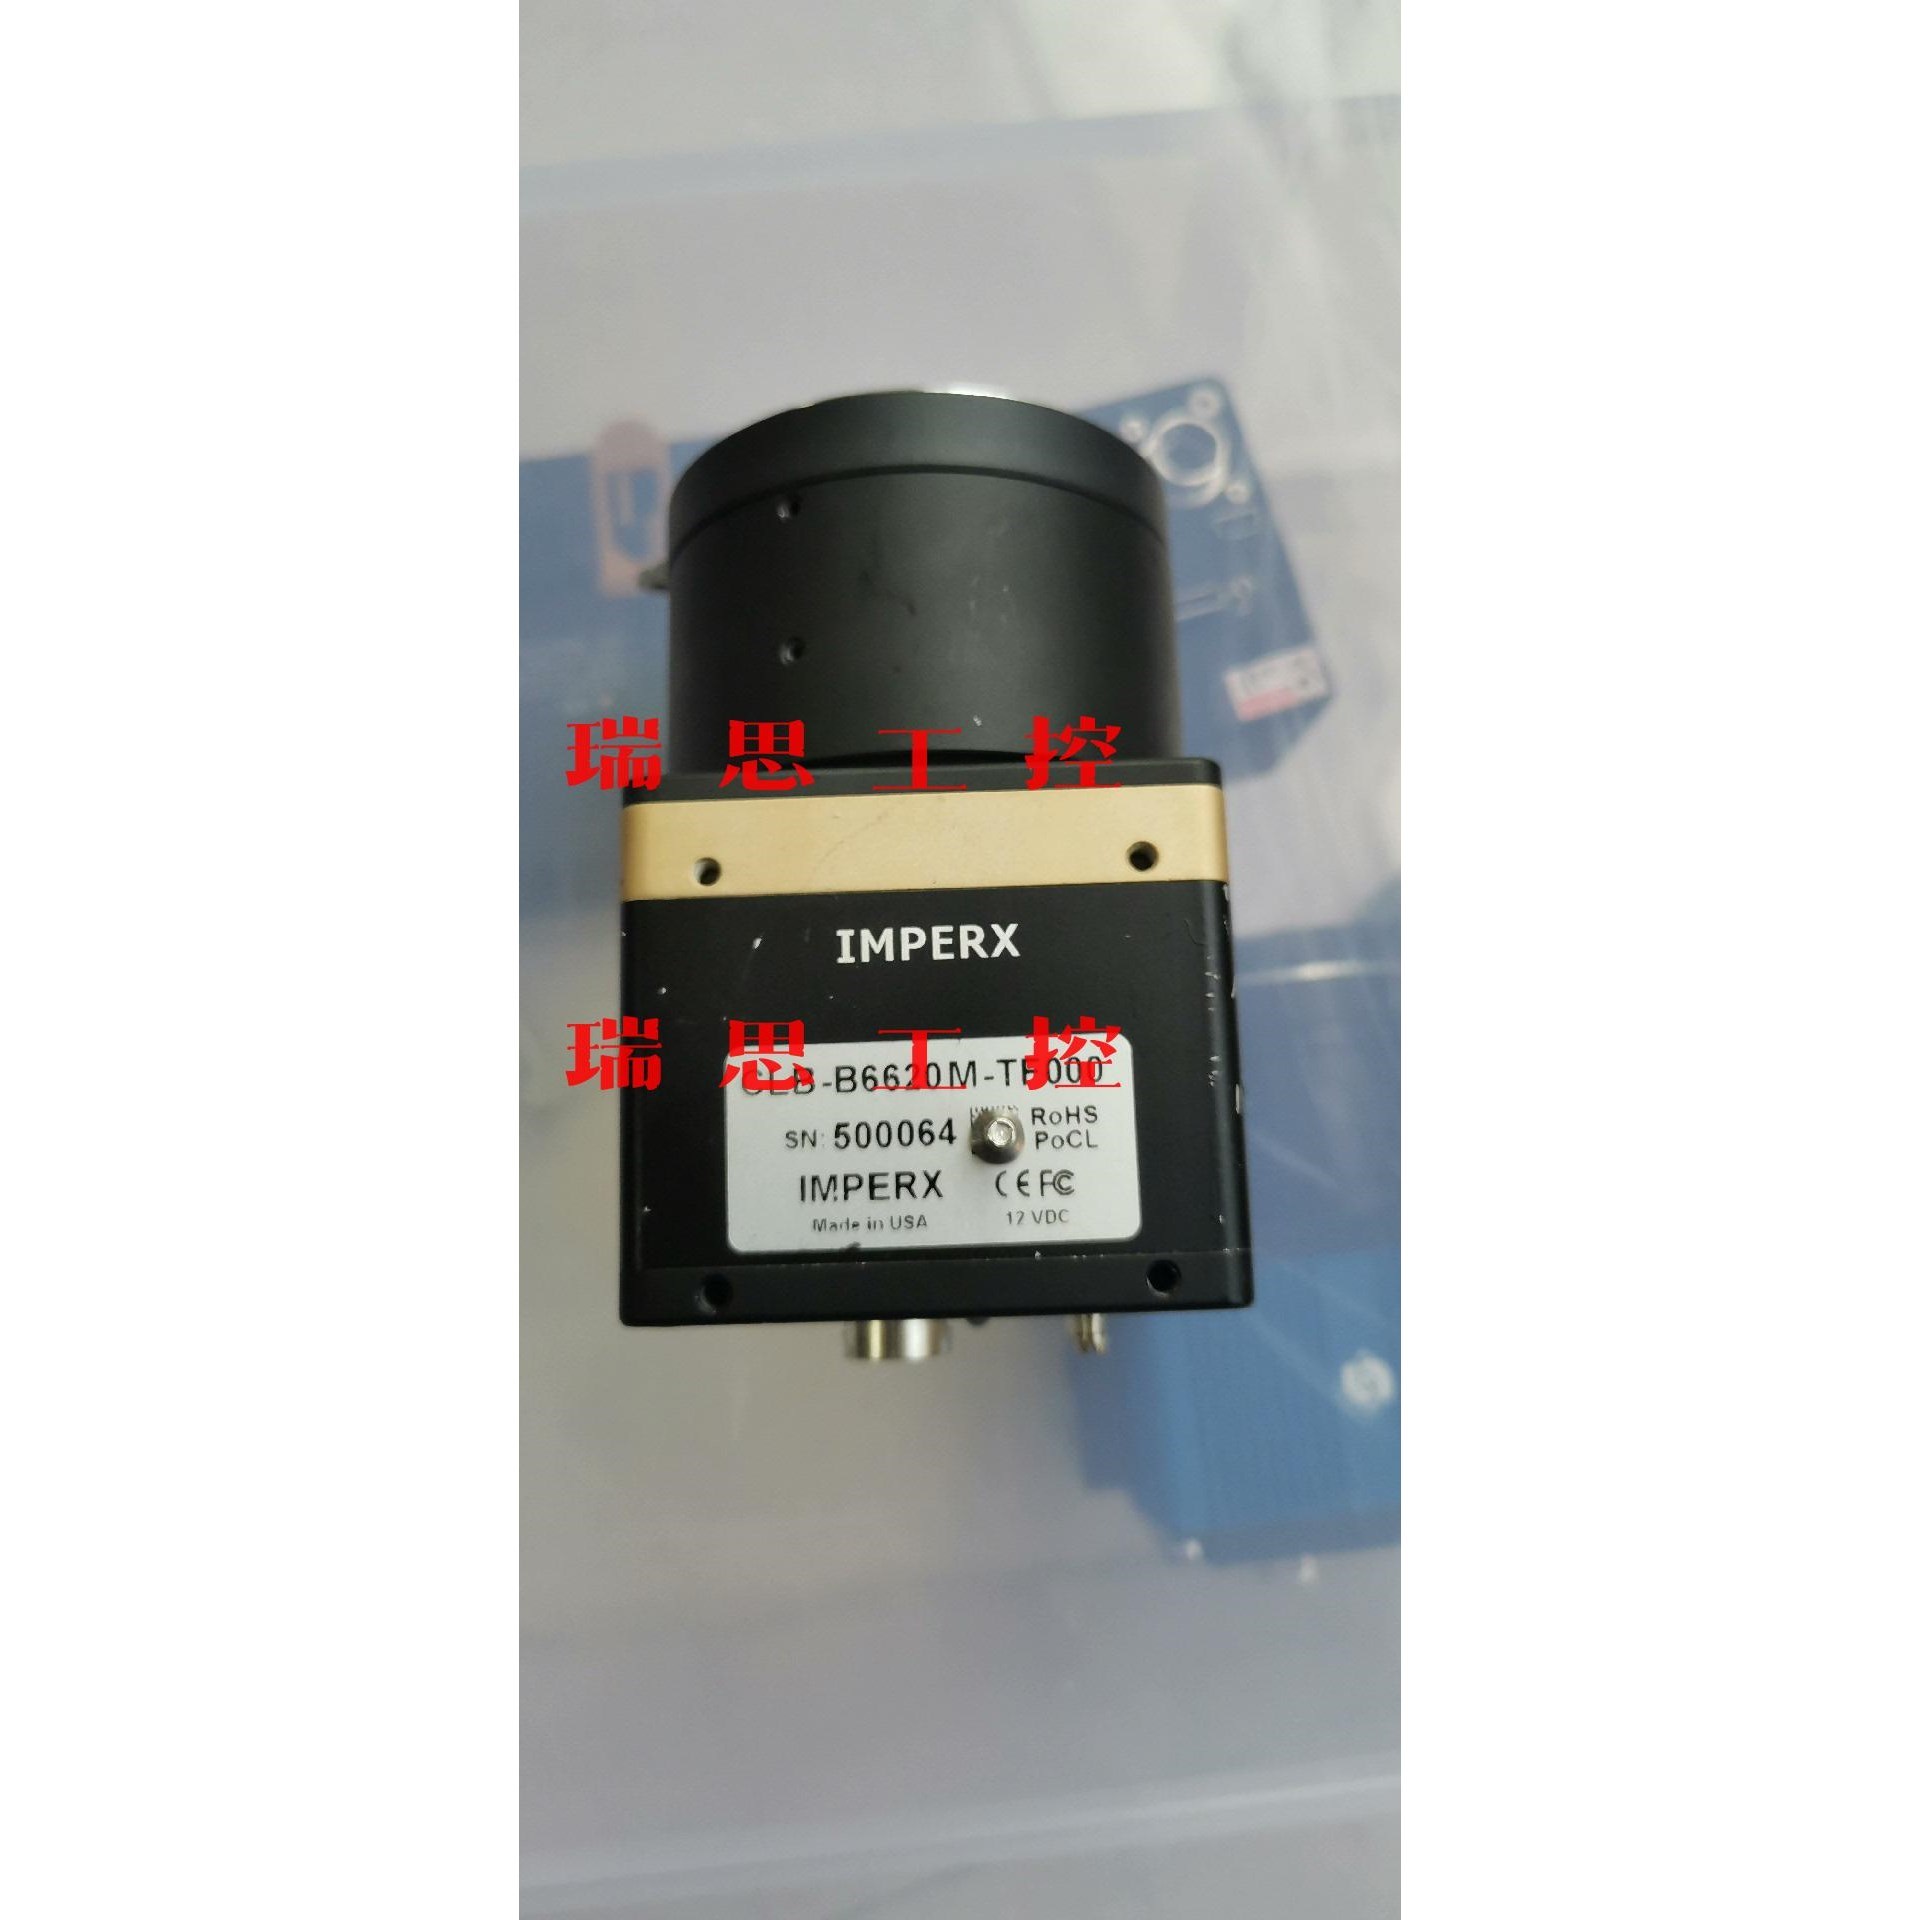 iMPERX工业相机，GEV-6620M-TF097，CLB议价出售